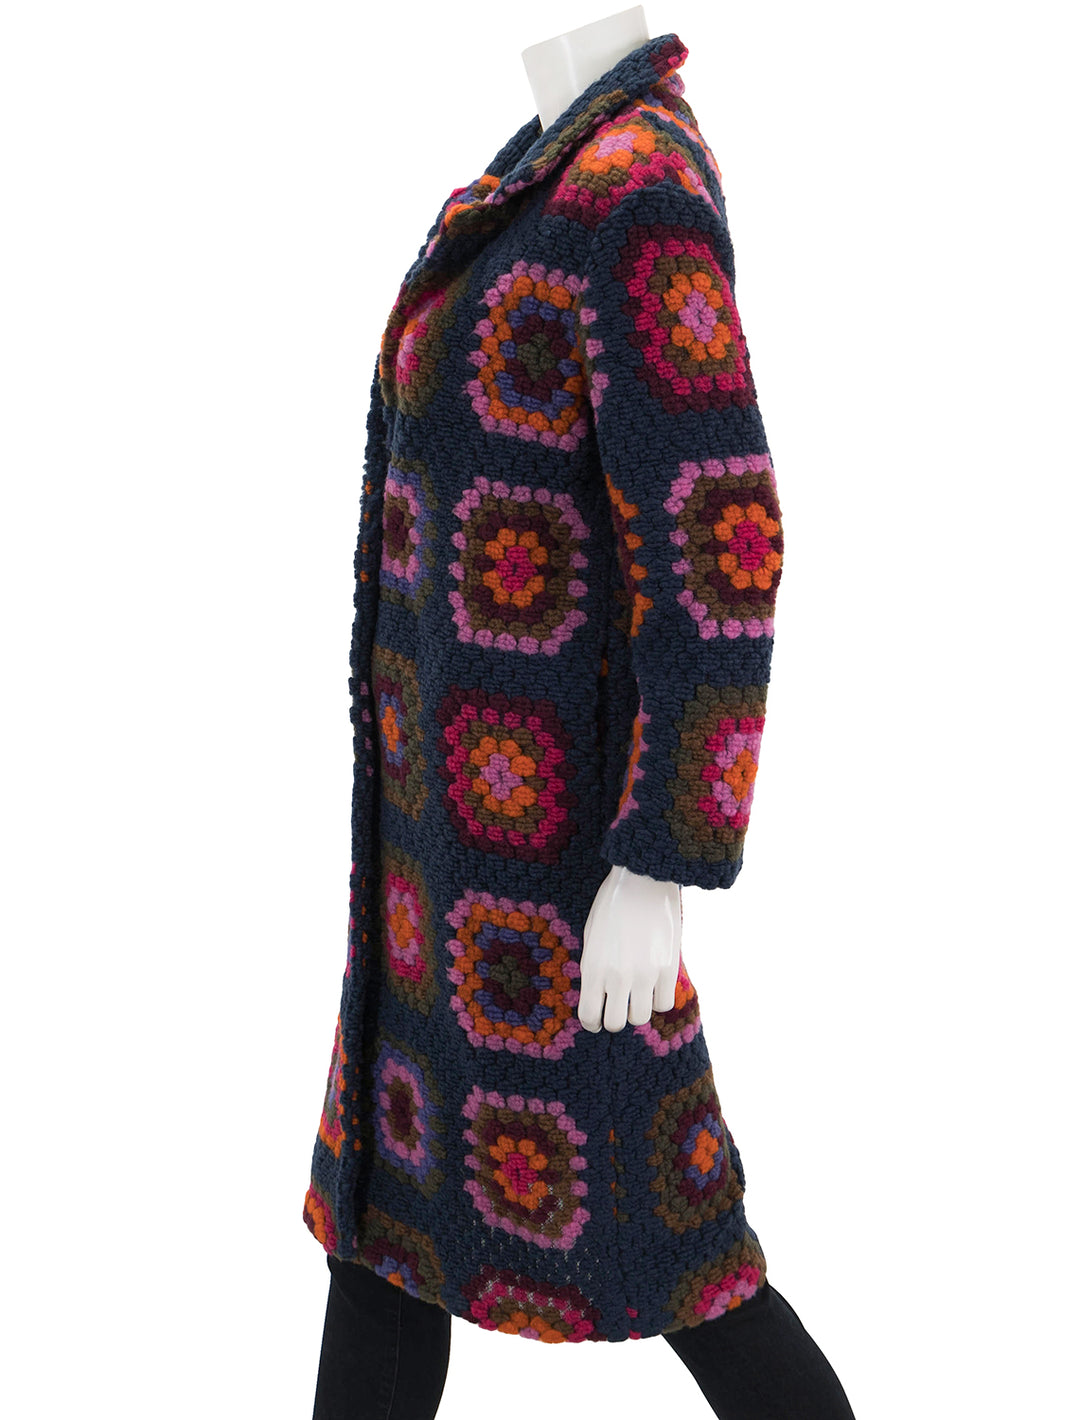 Side view of Vilagallo's yana crochet cardigan coat.